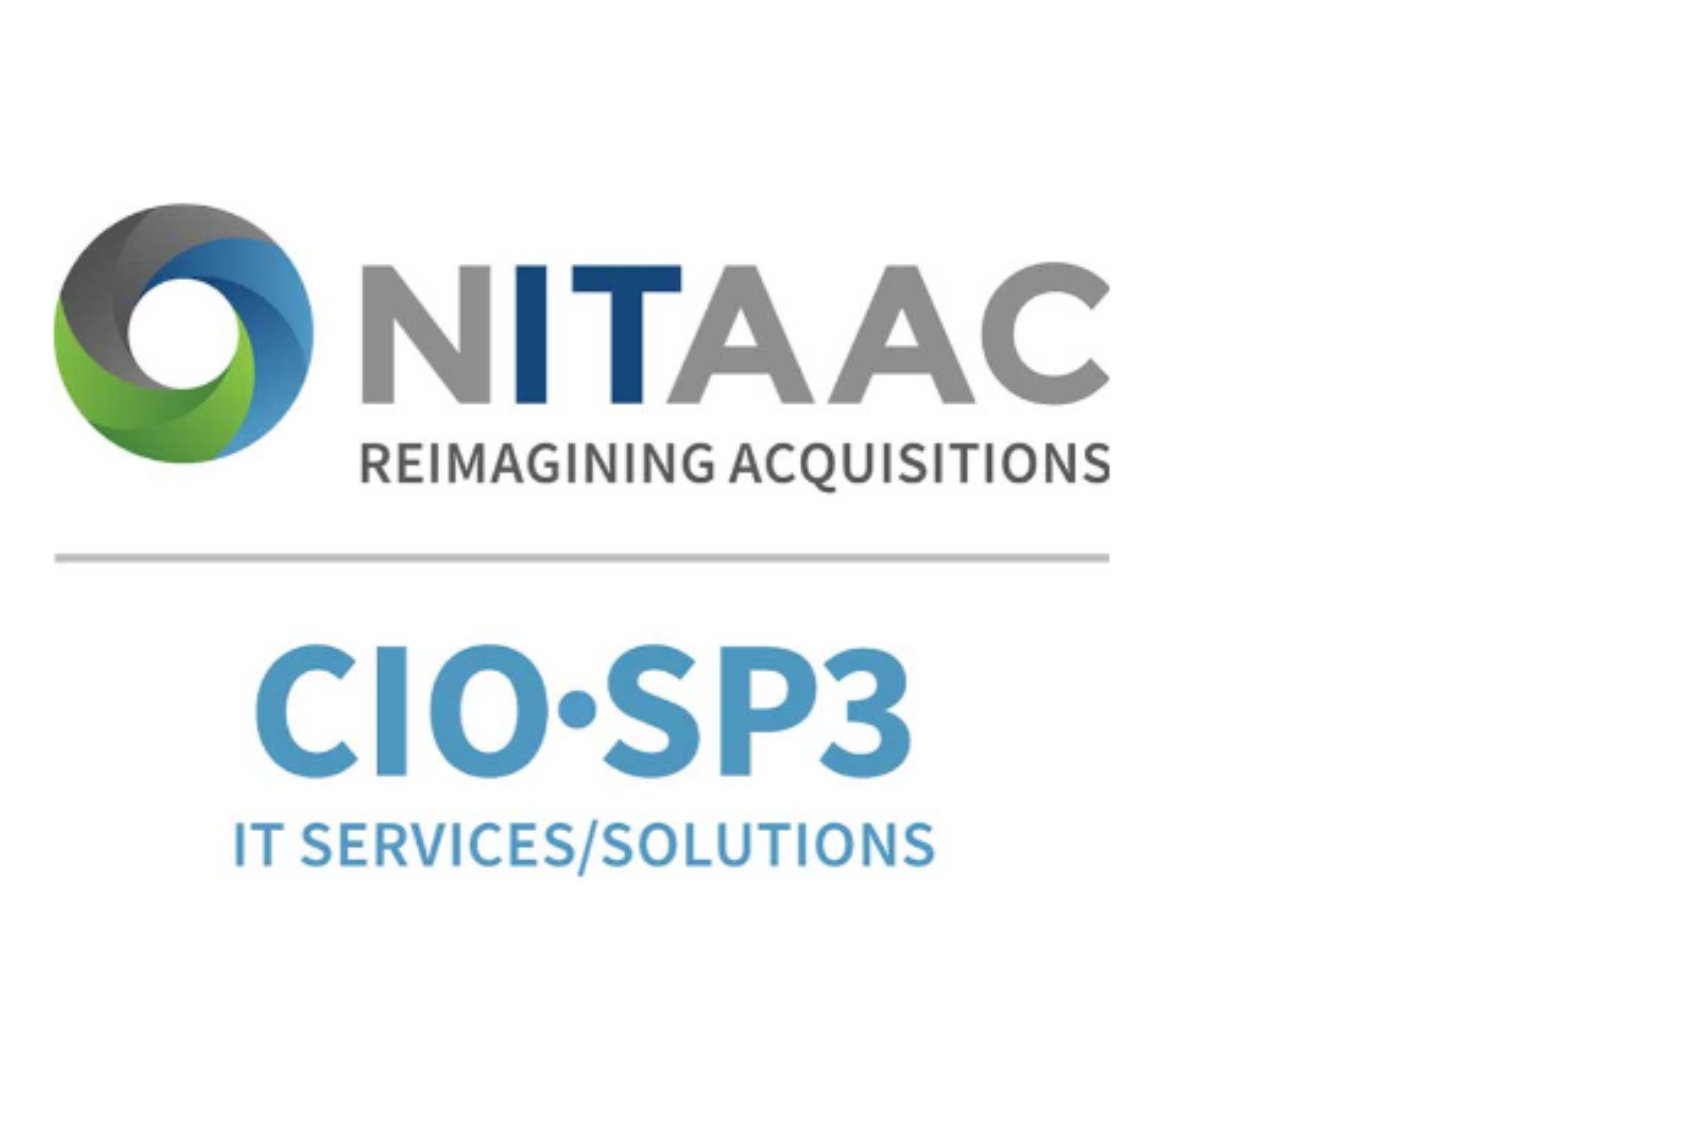 NITAAC Reimagining Acquisitions CIO SP3 IT Services/Solutions